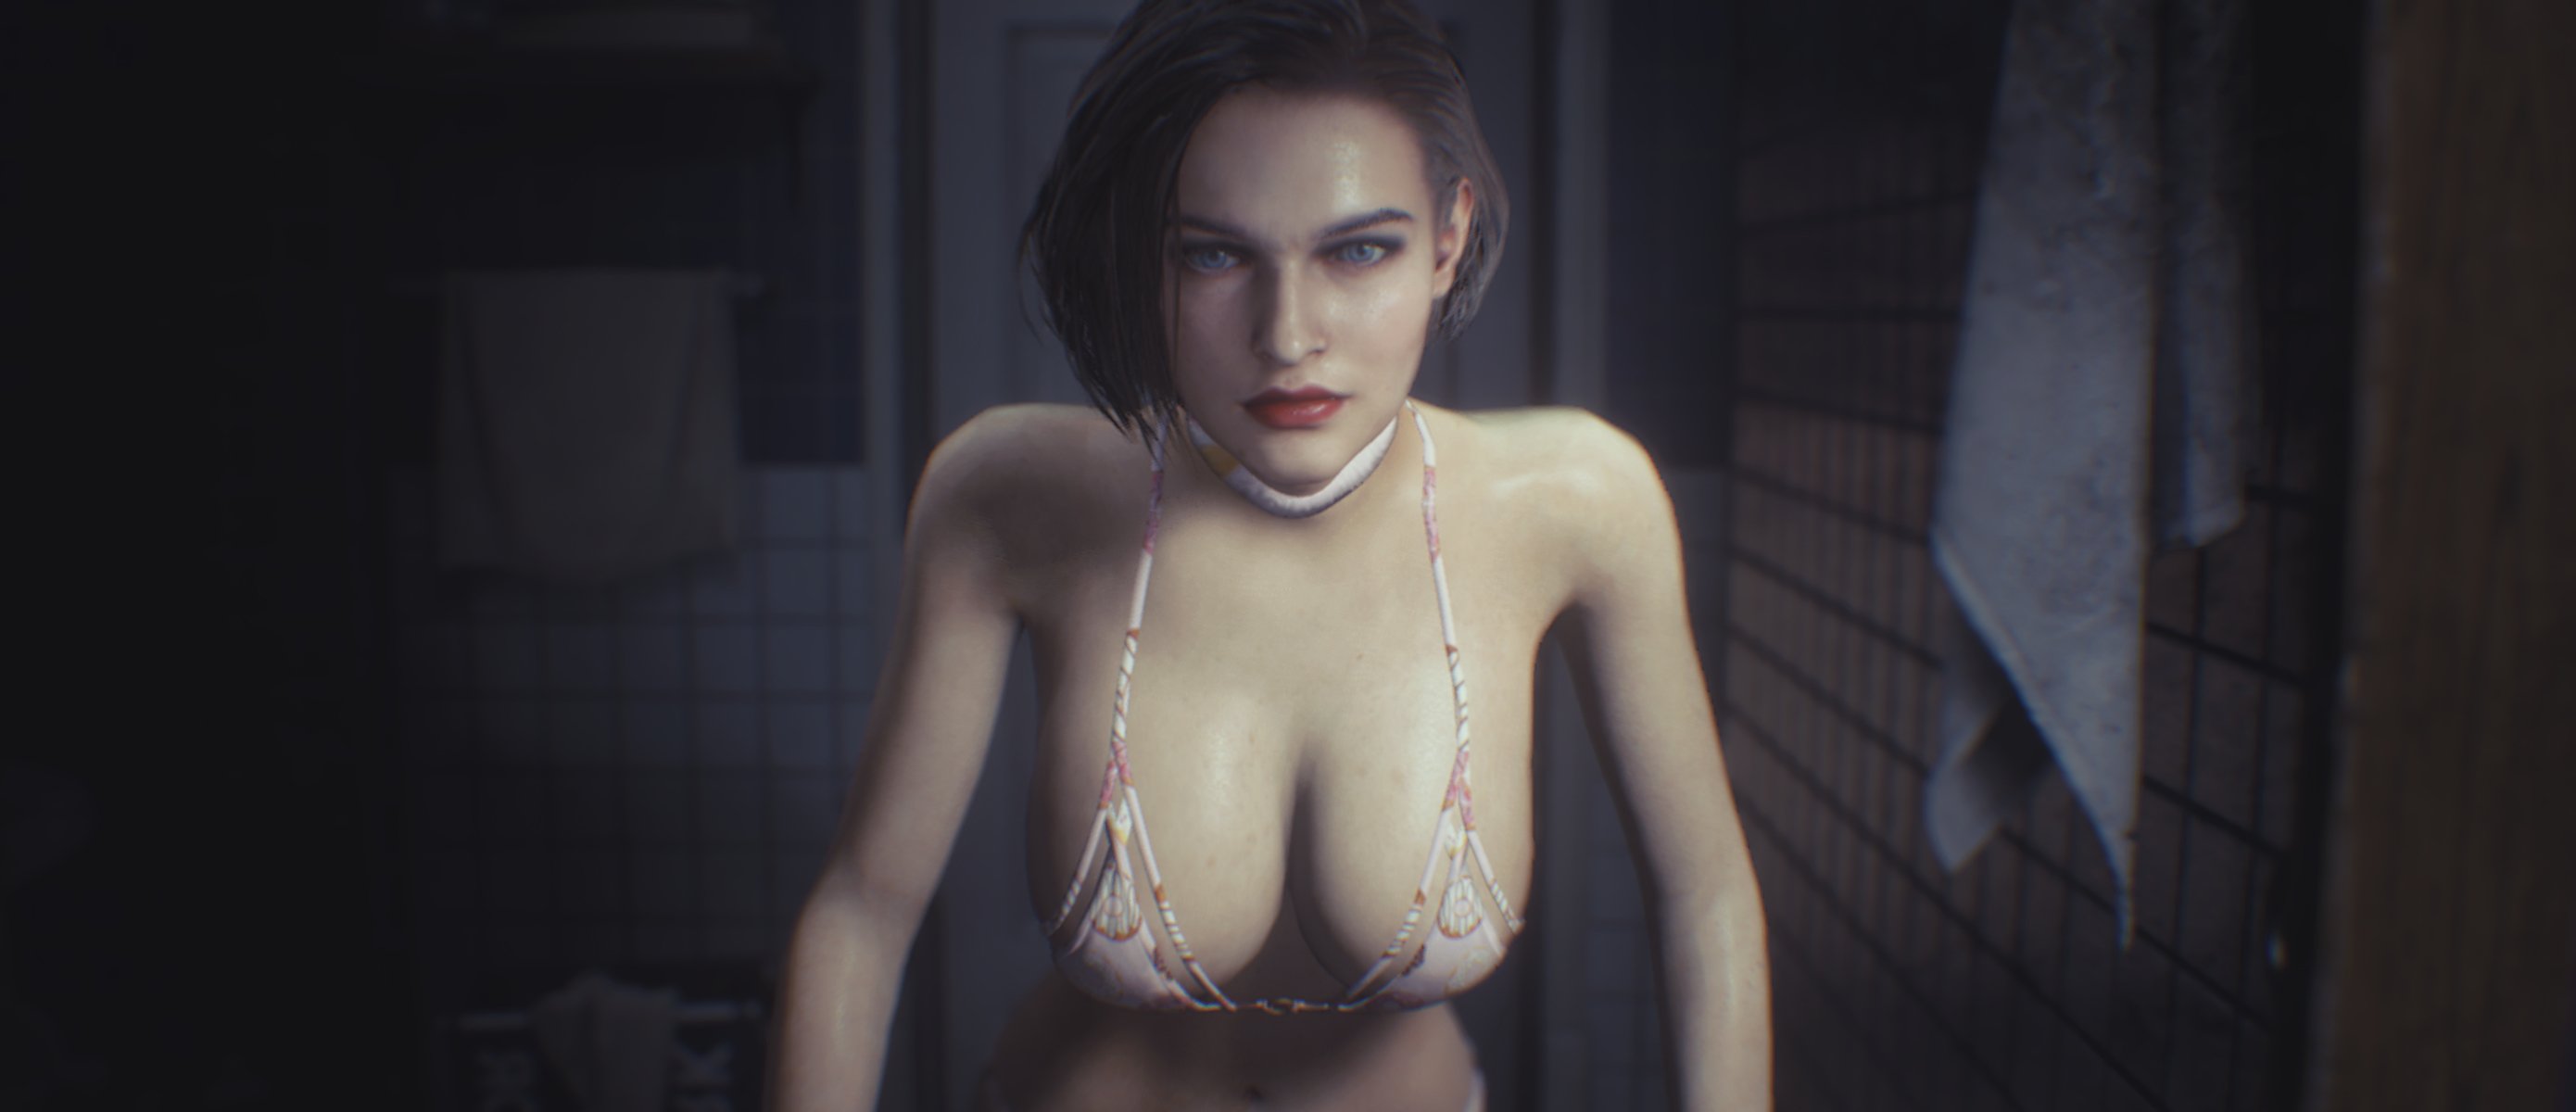 Best of Resident evil 3 nude mod